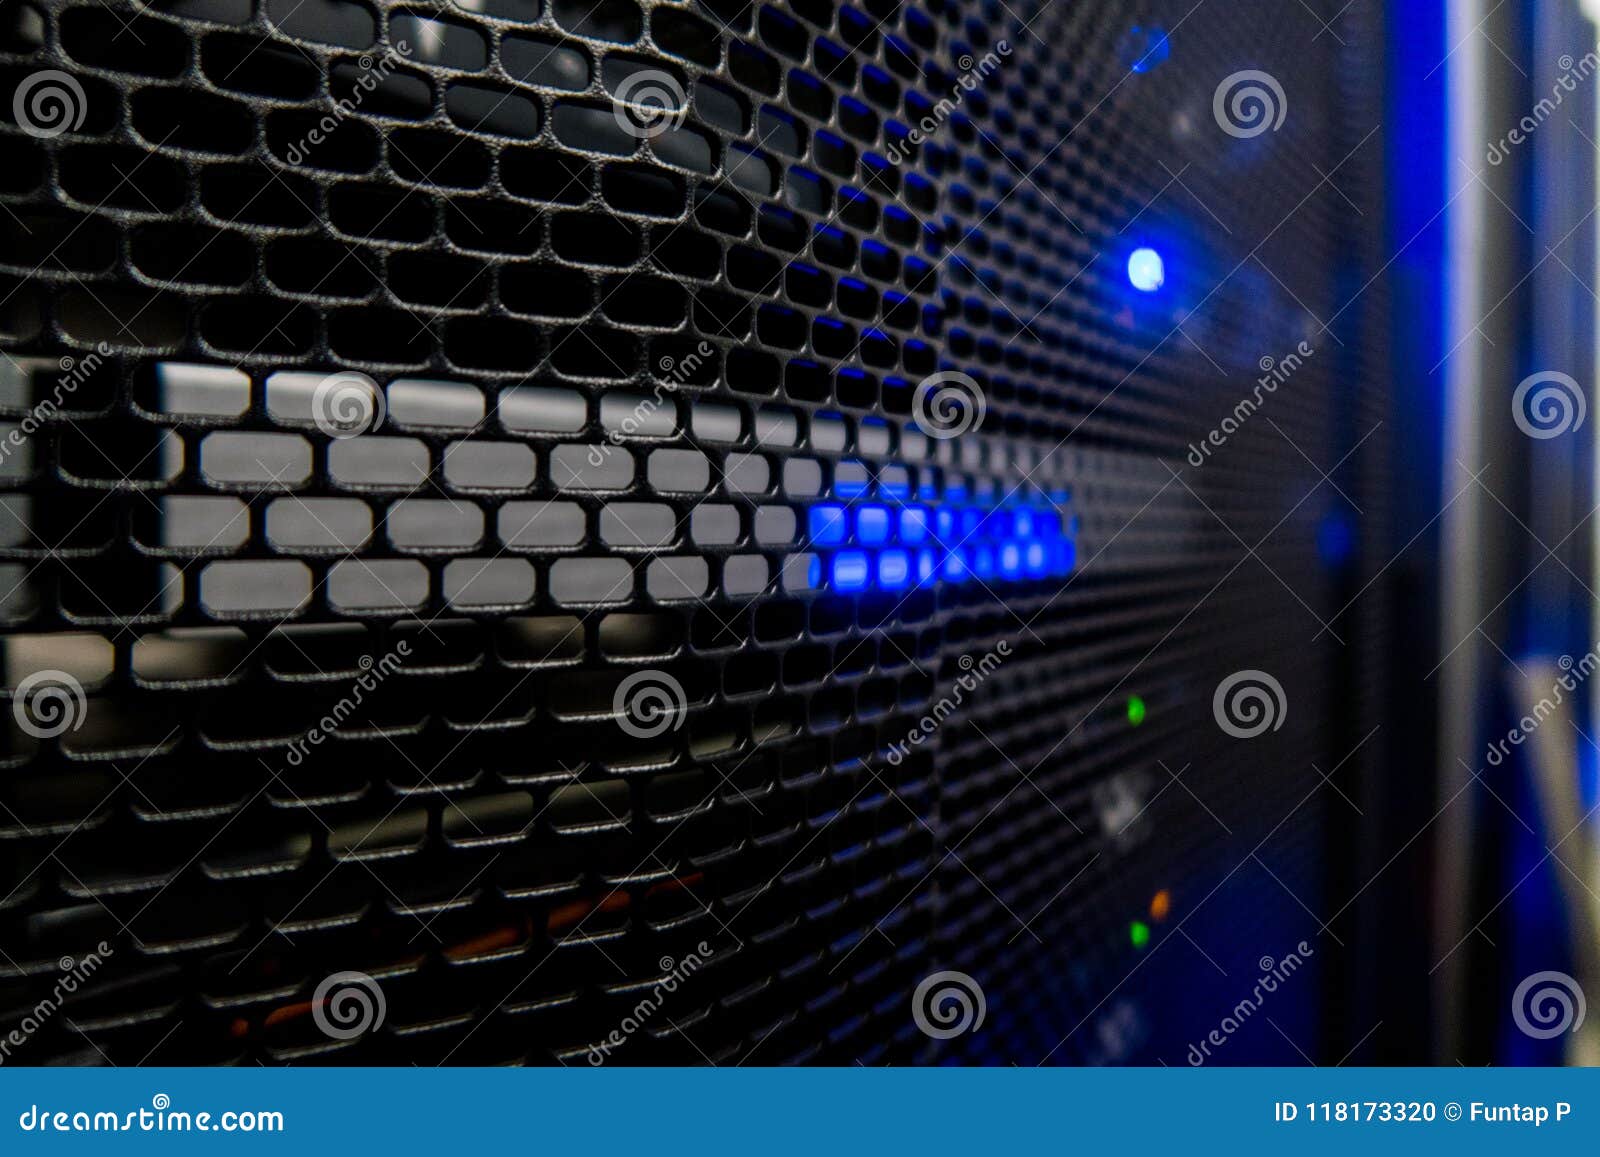 server rack with servers and cables. server racks, server room